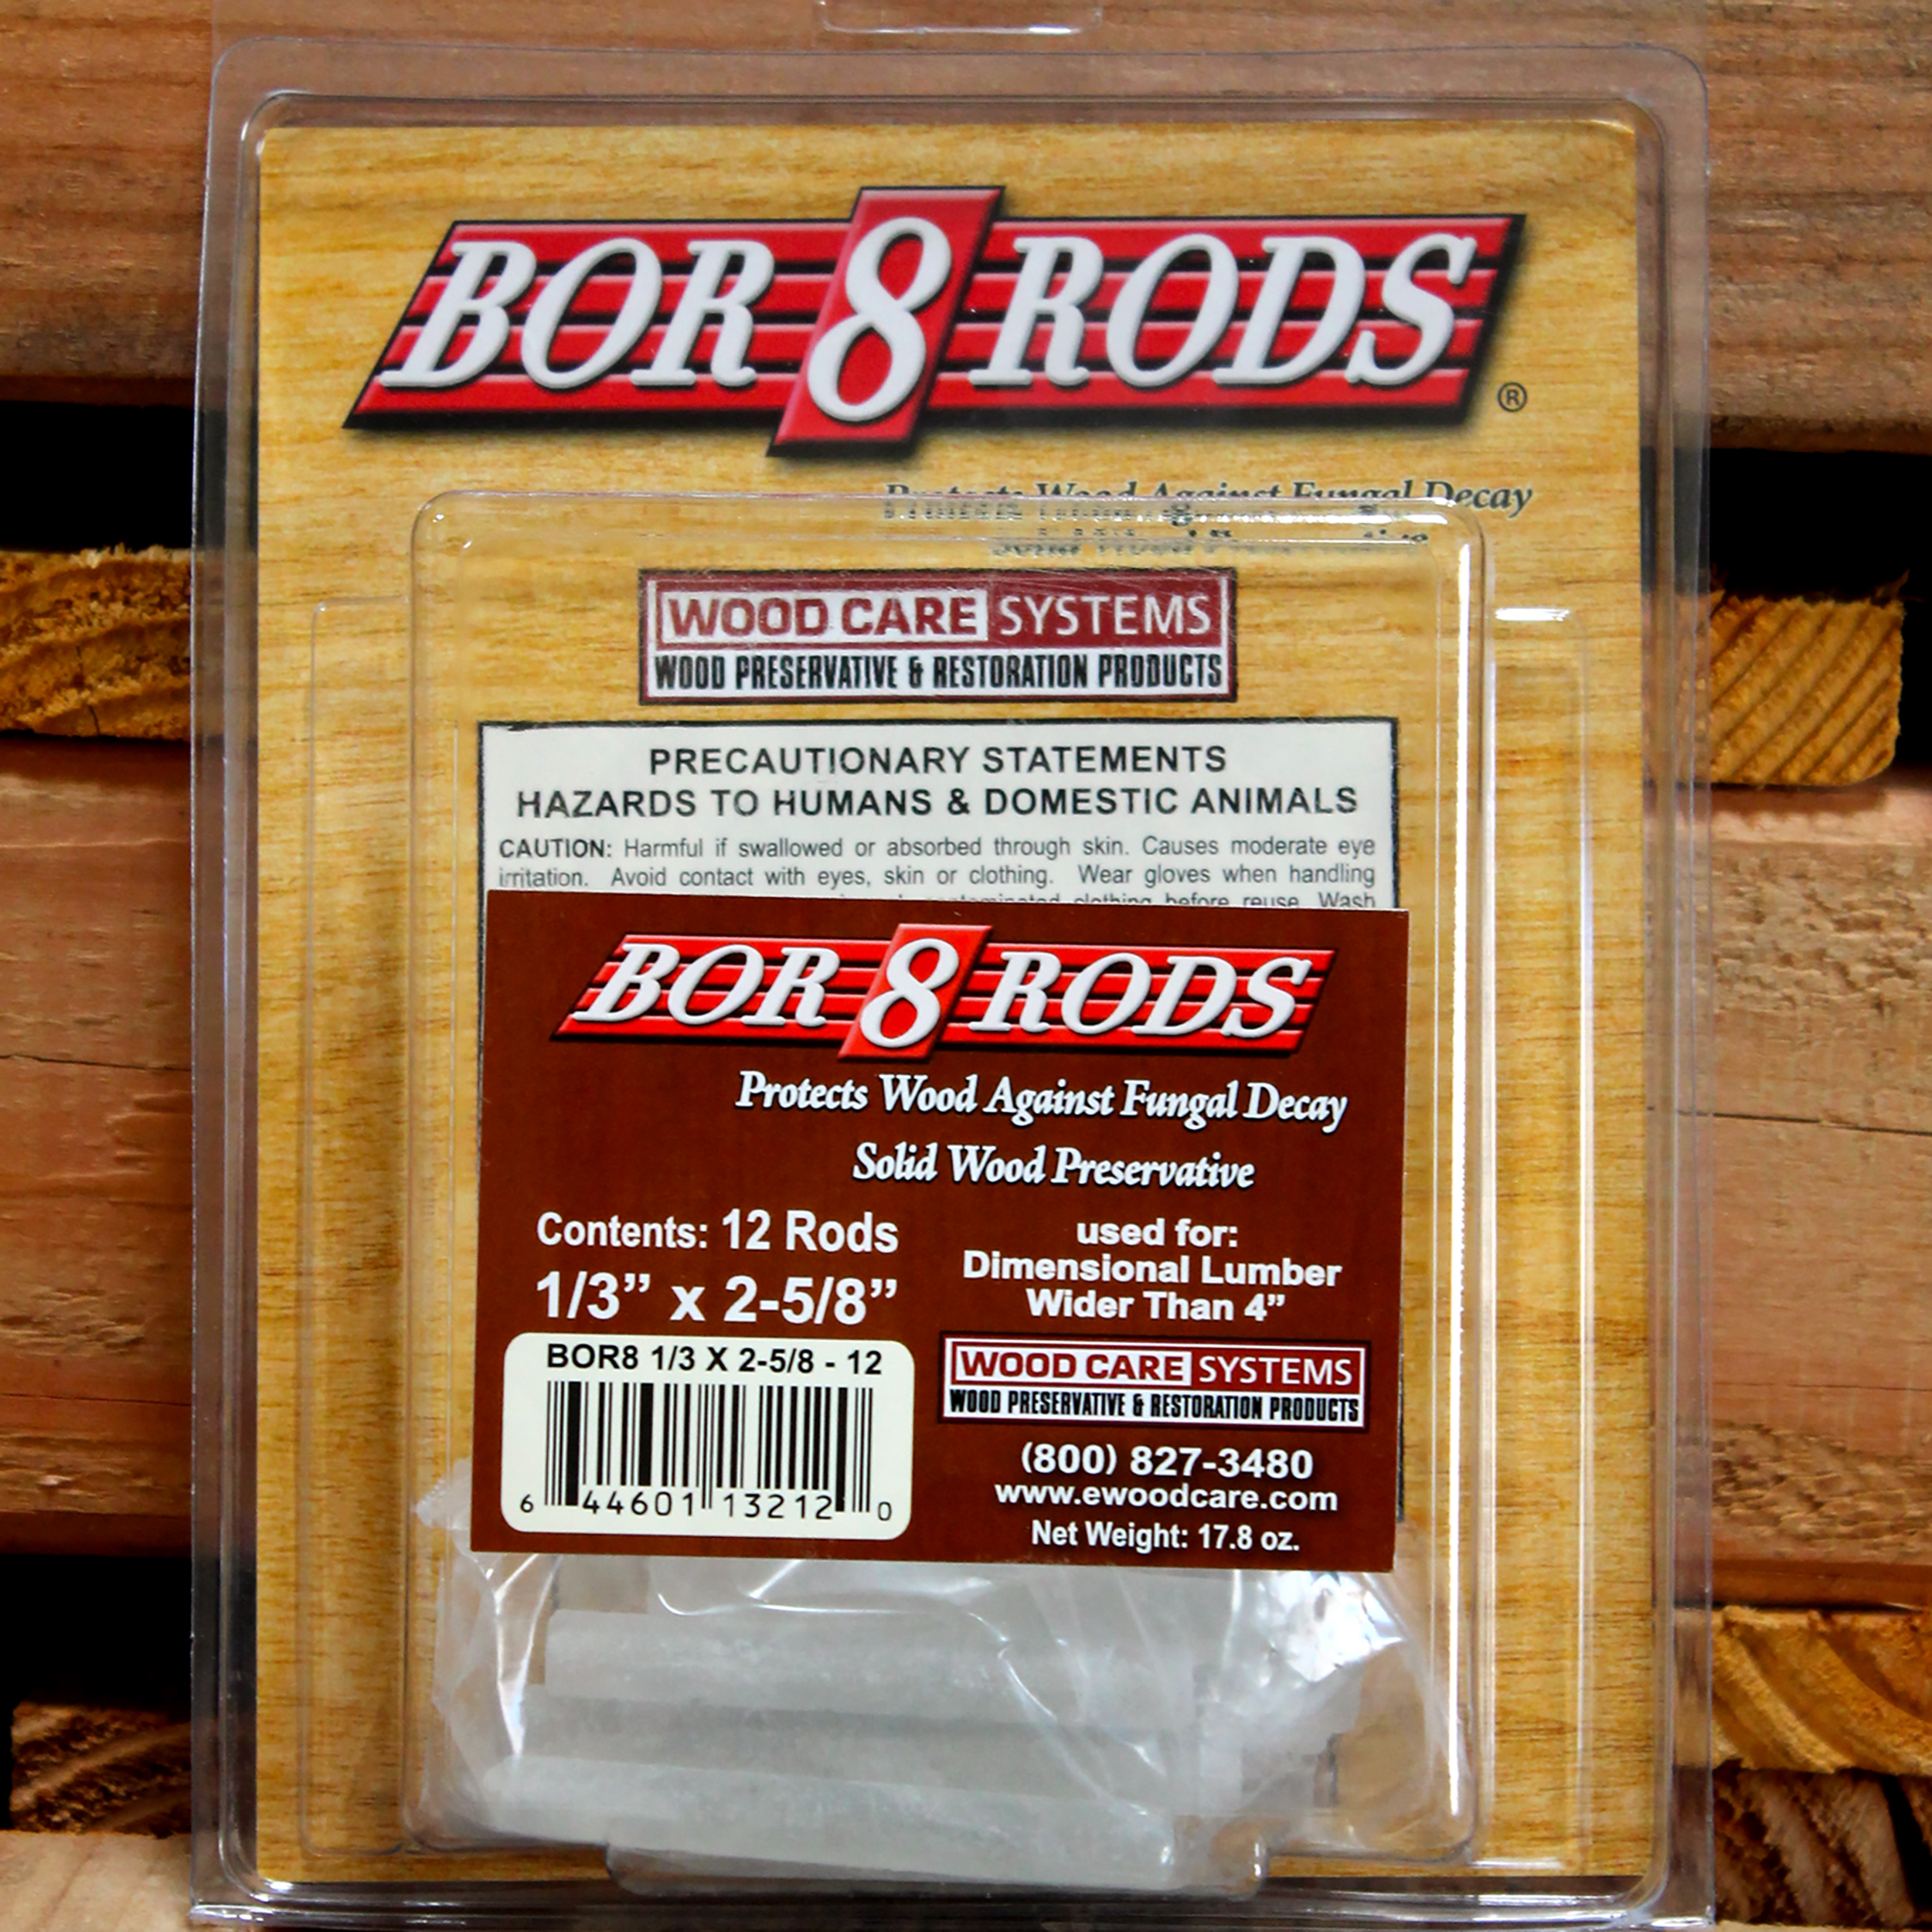 Bor-8-rods, 1/3" X 2-5/8", Box Of 100